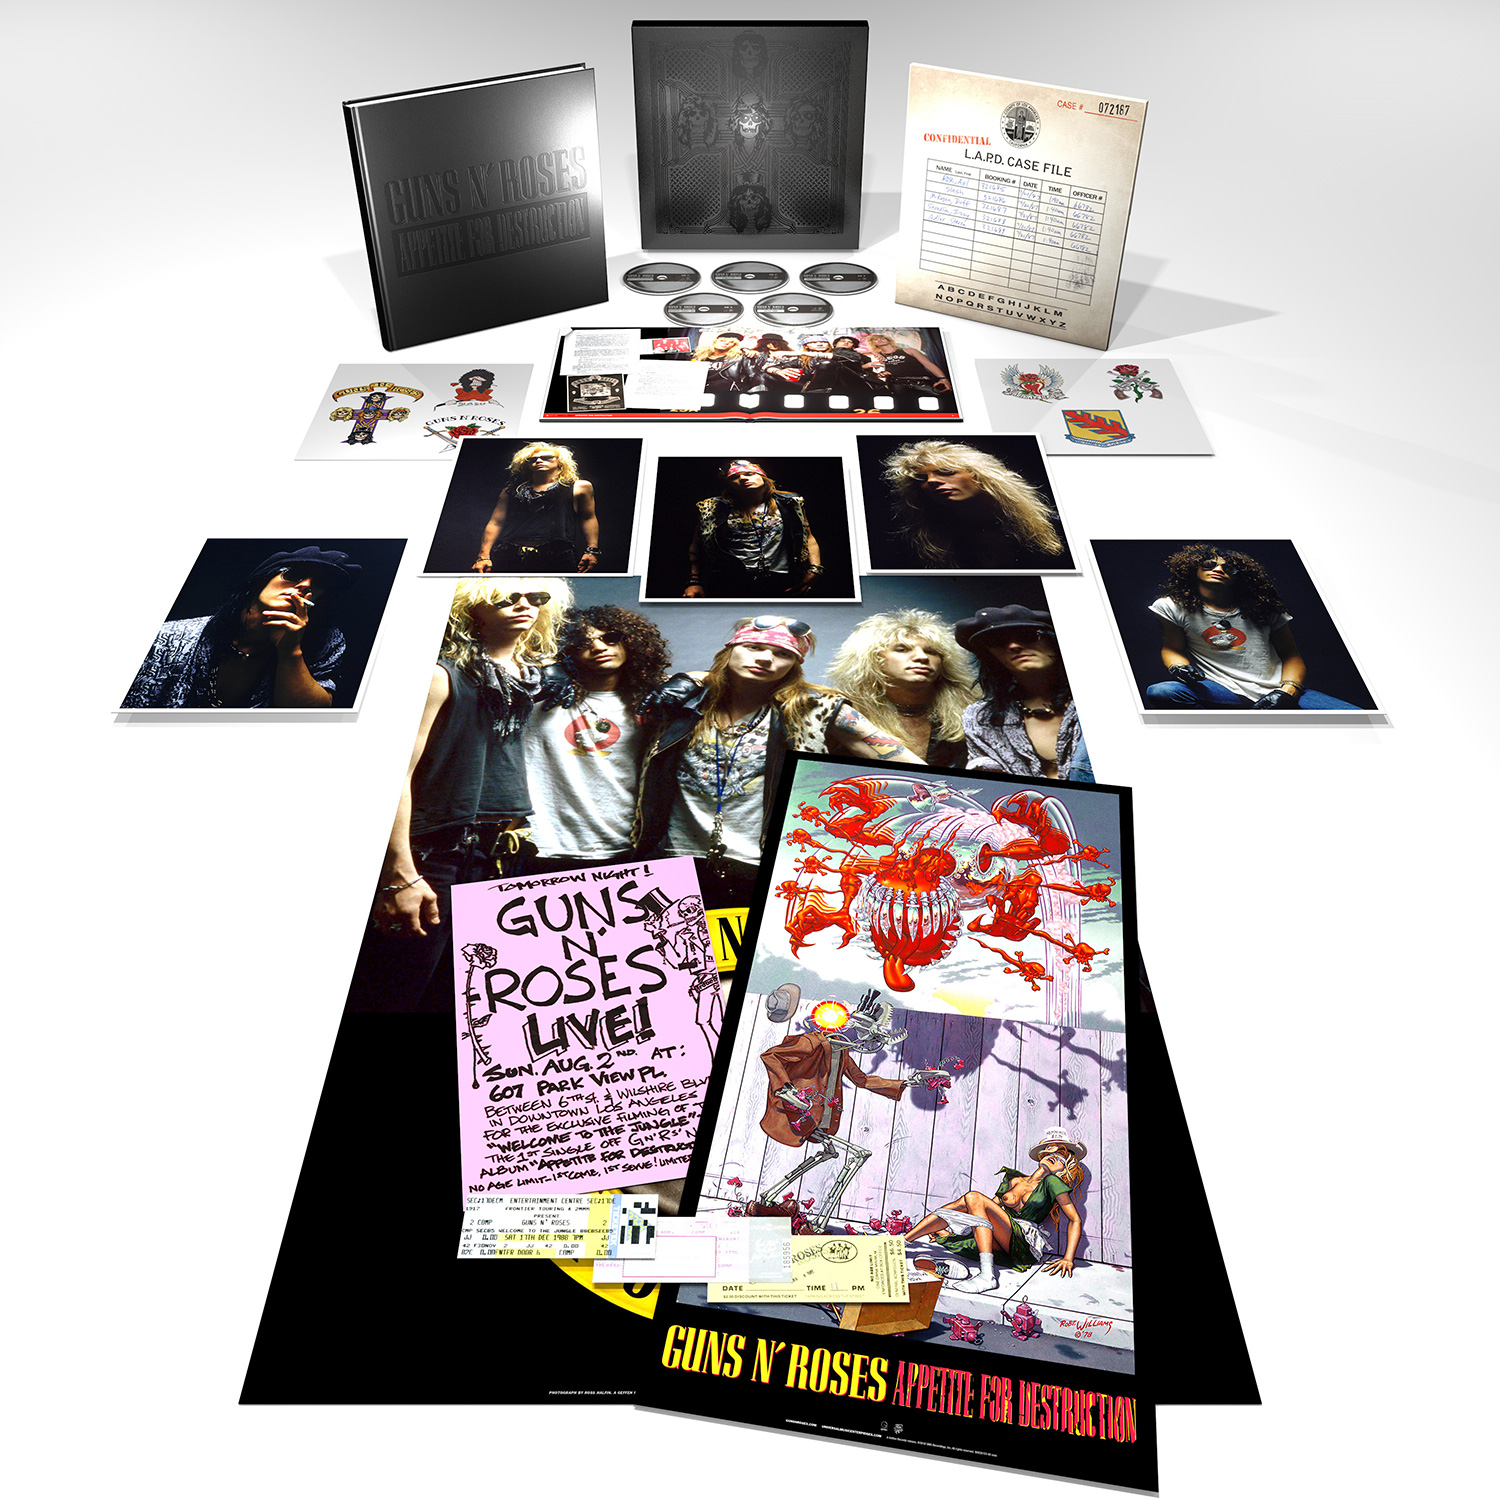 Guns N Roses アペタイト フォー ディストラクション 最新リマスター Tower Records Online